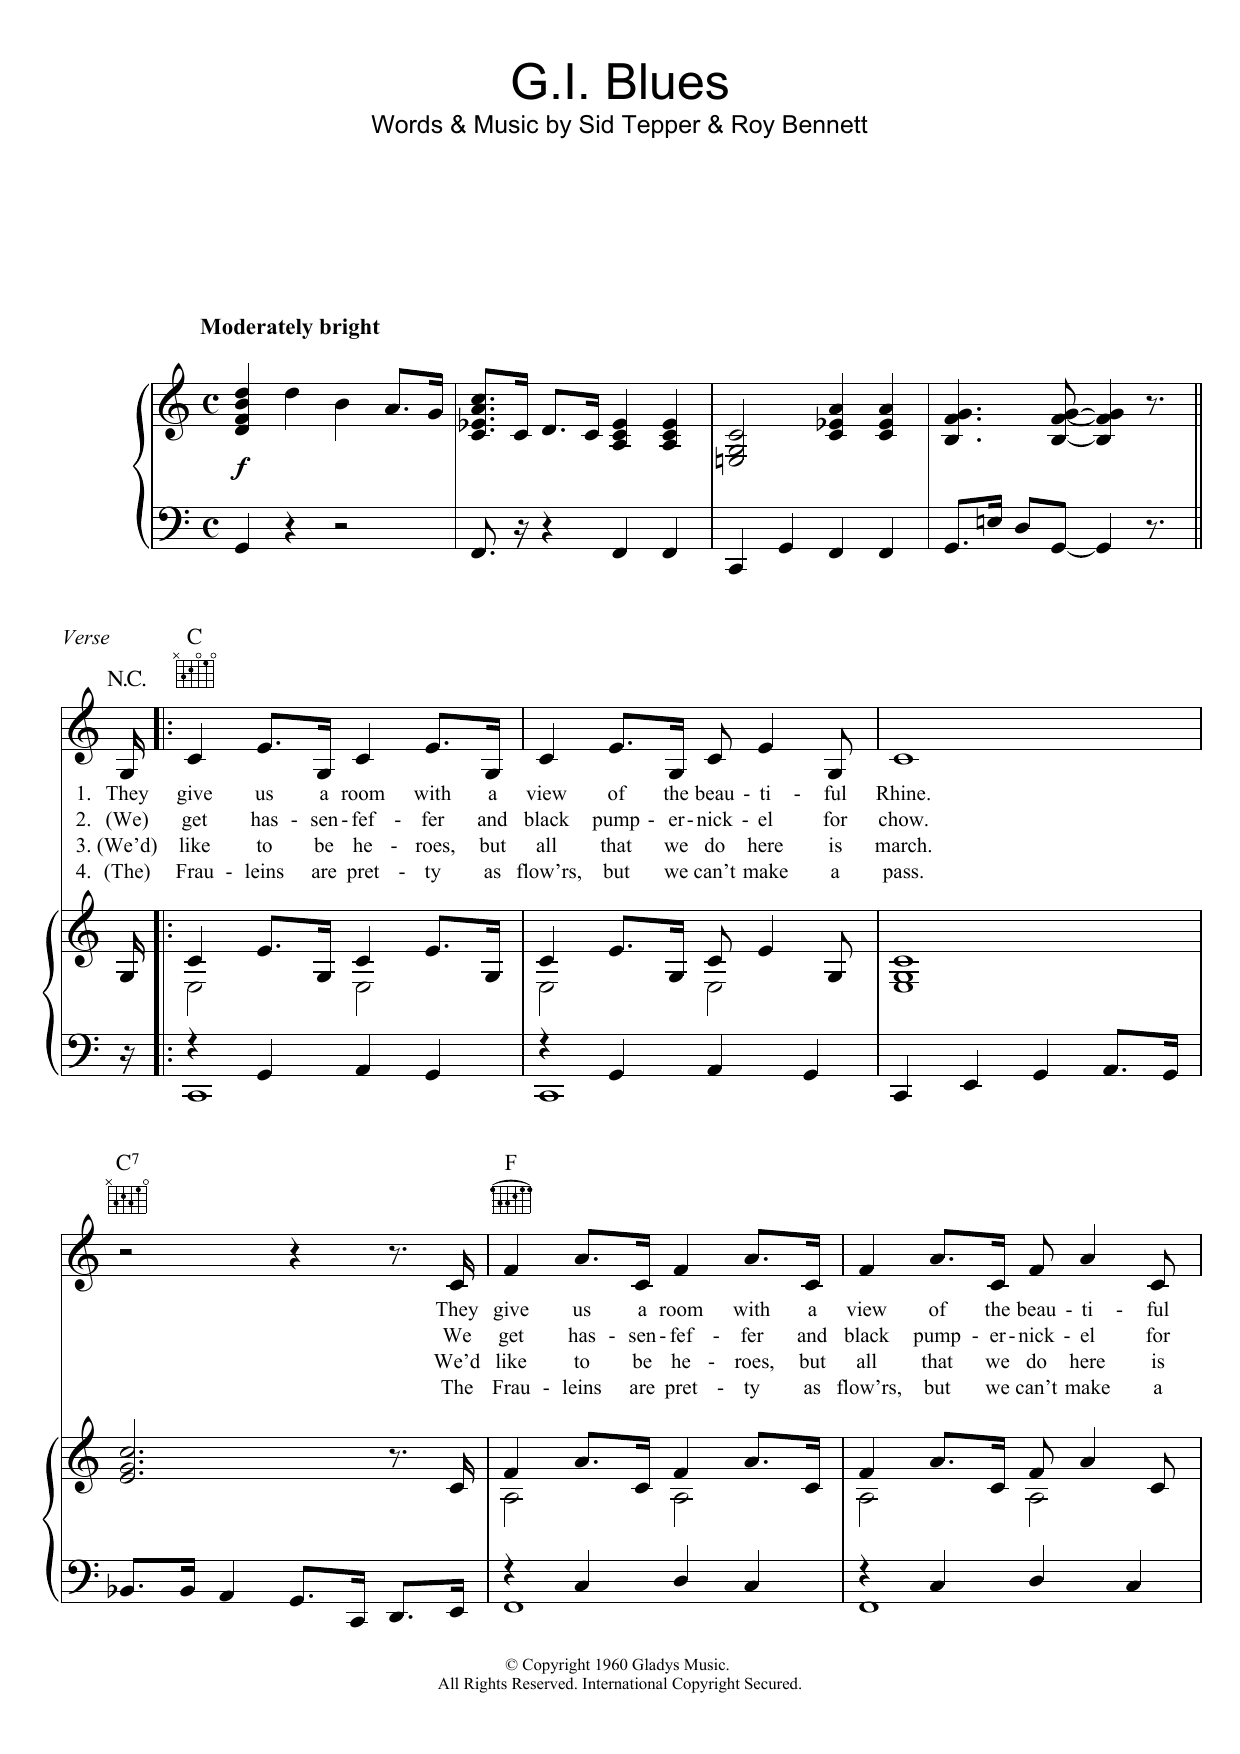 Elvis Presley G.I. Blues Sheet Music Notes & Chords for Melody Line, Lyrics & Chords - Download or Print PDF